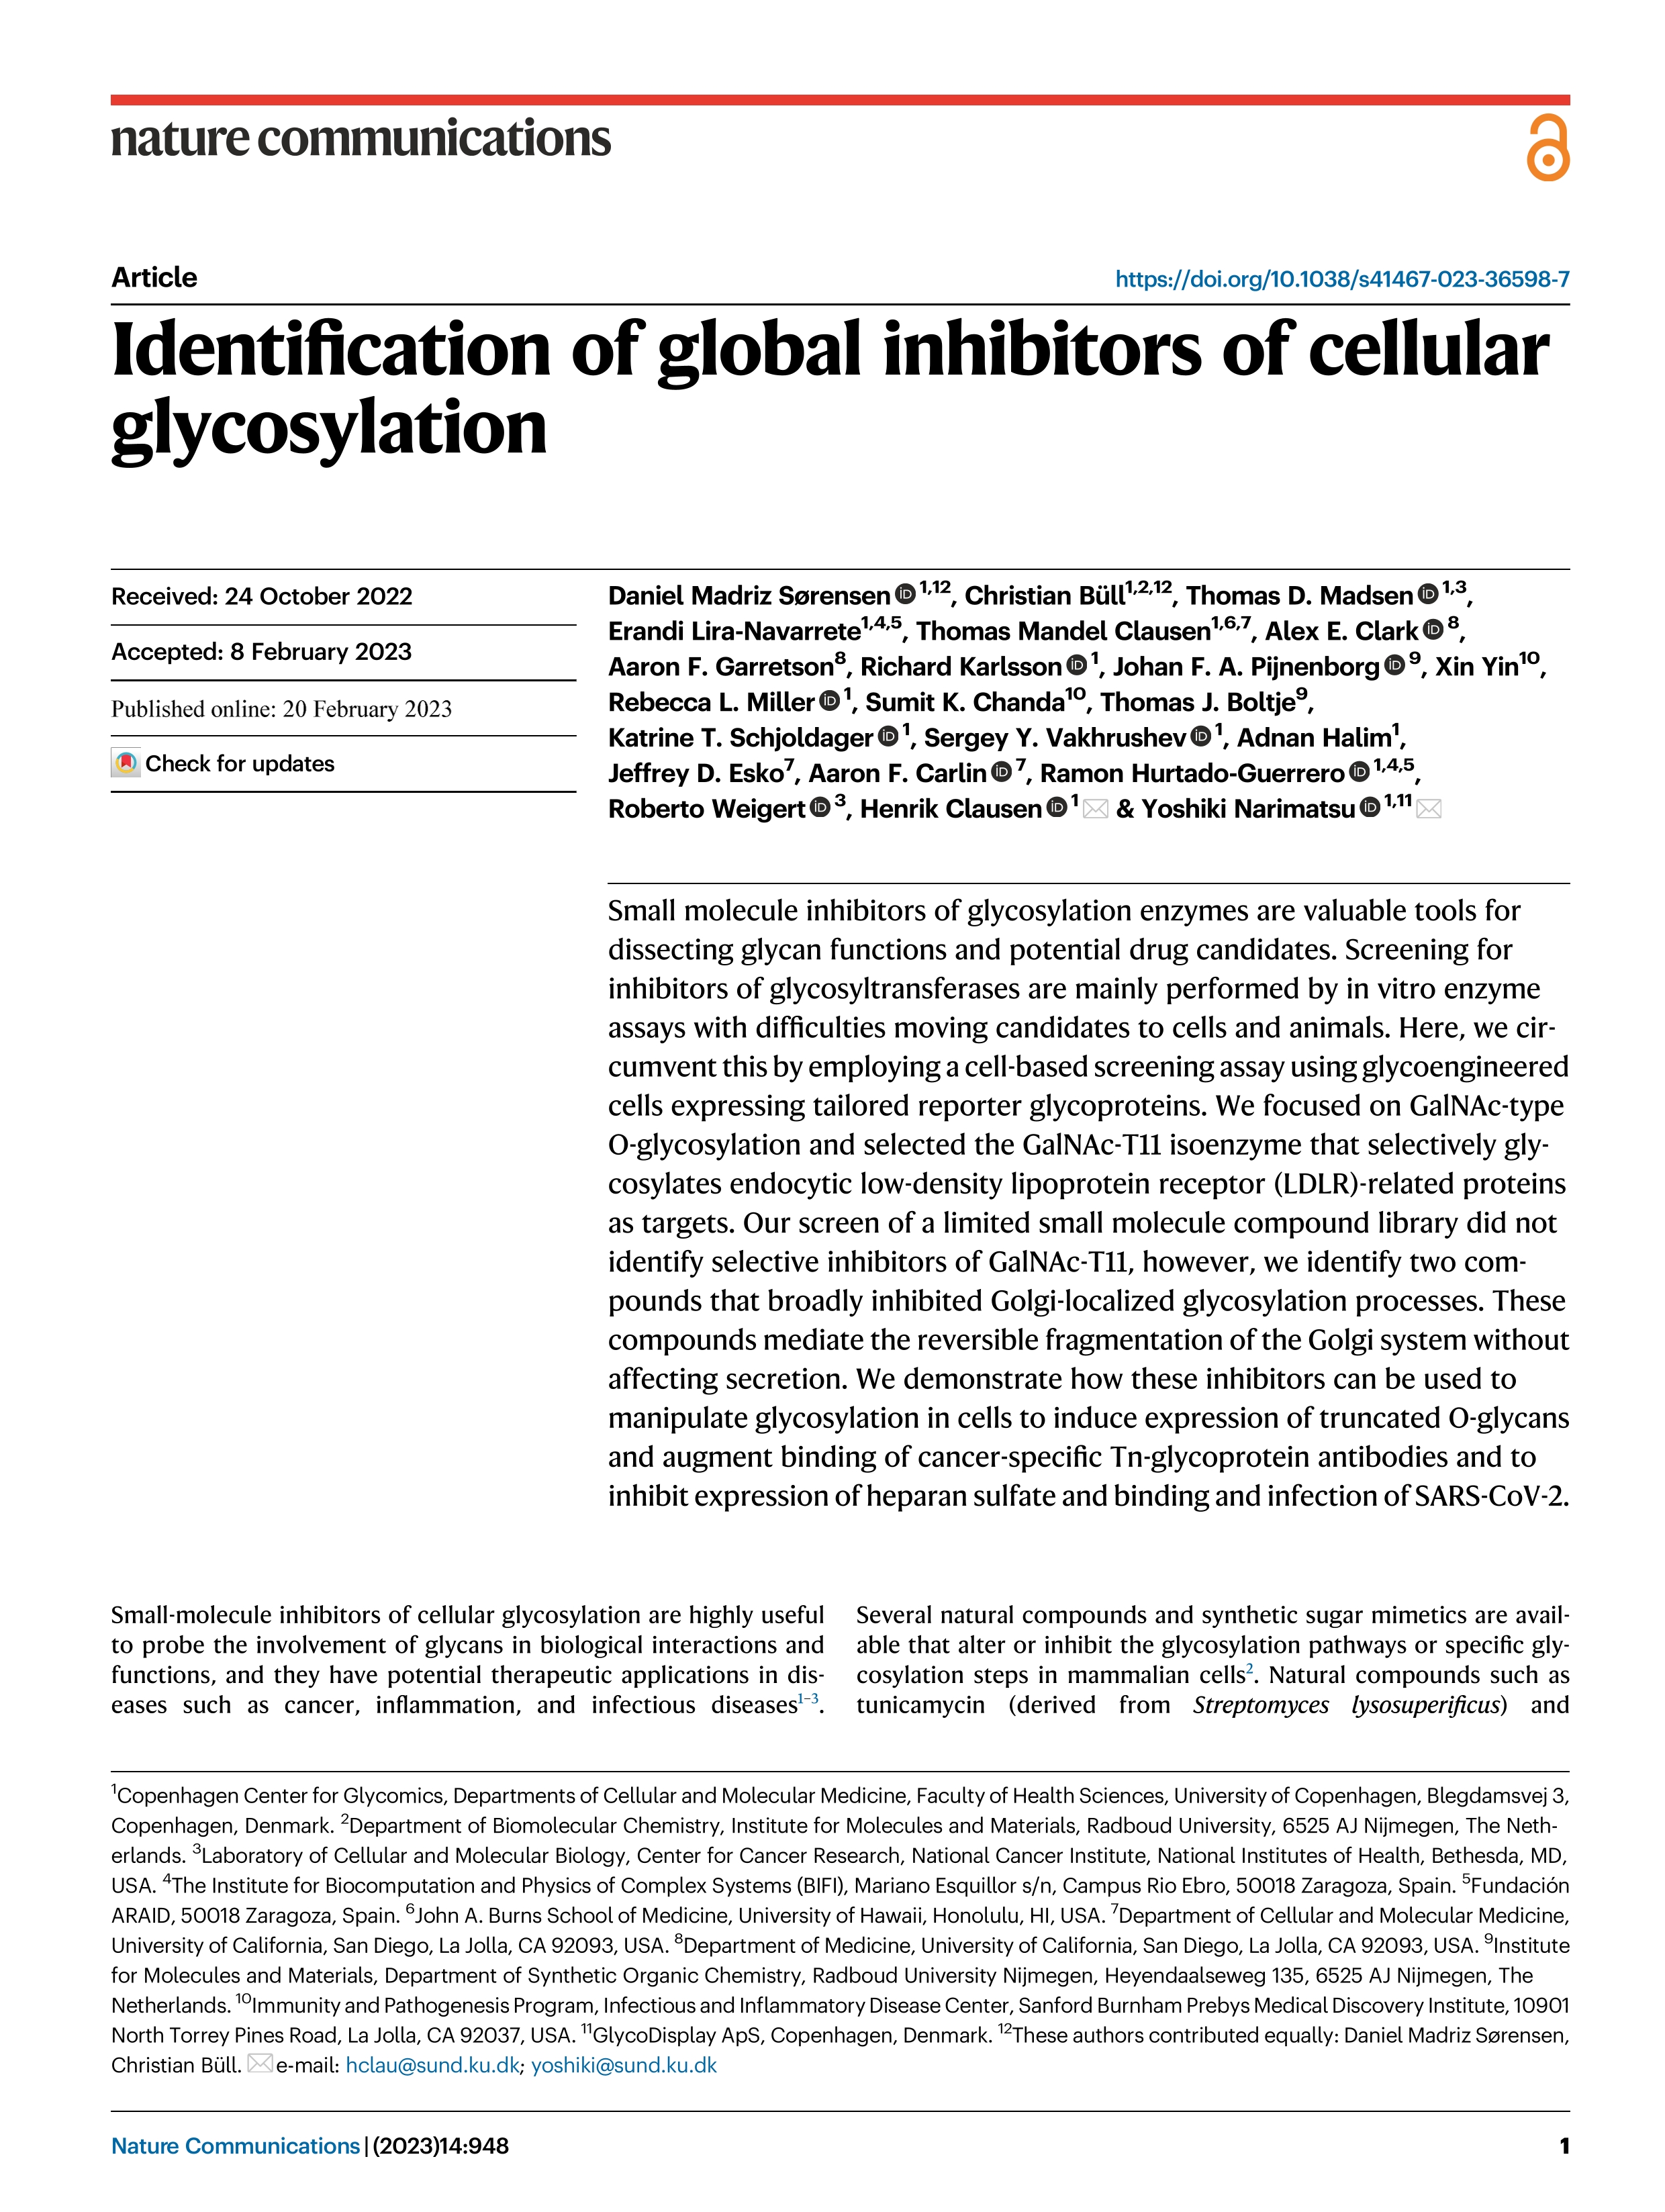 Identification of global inhibitors of cellular glycosylation